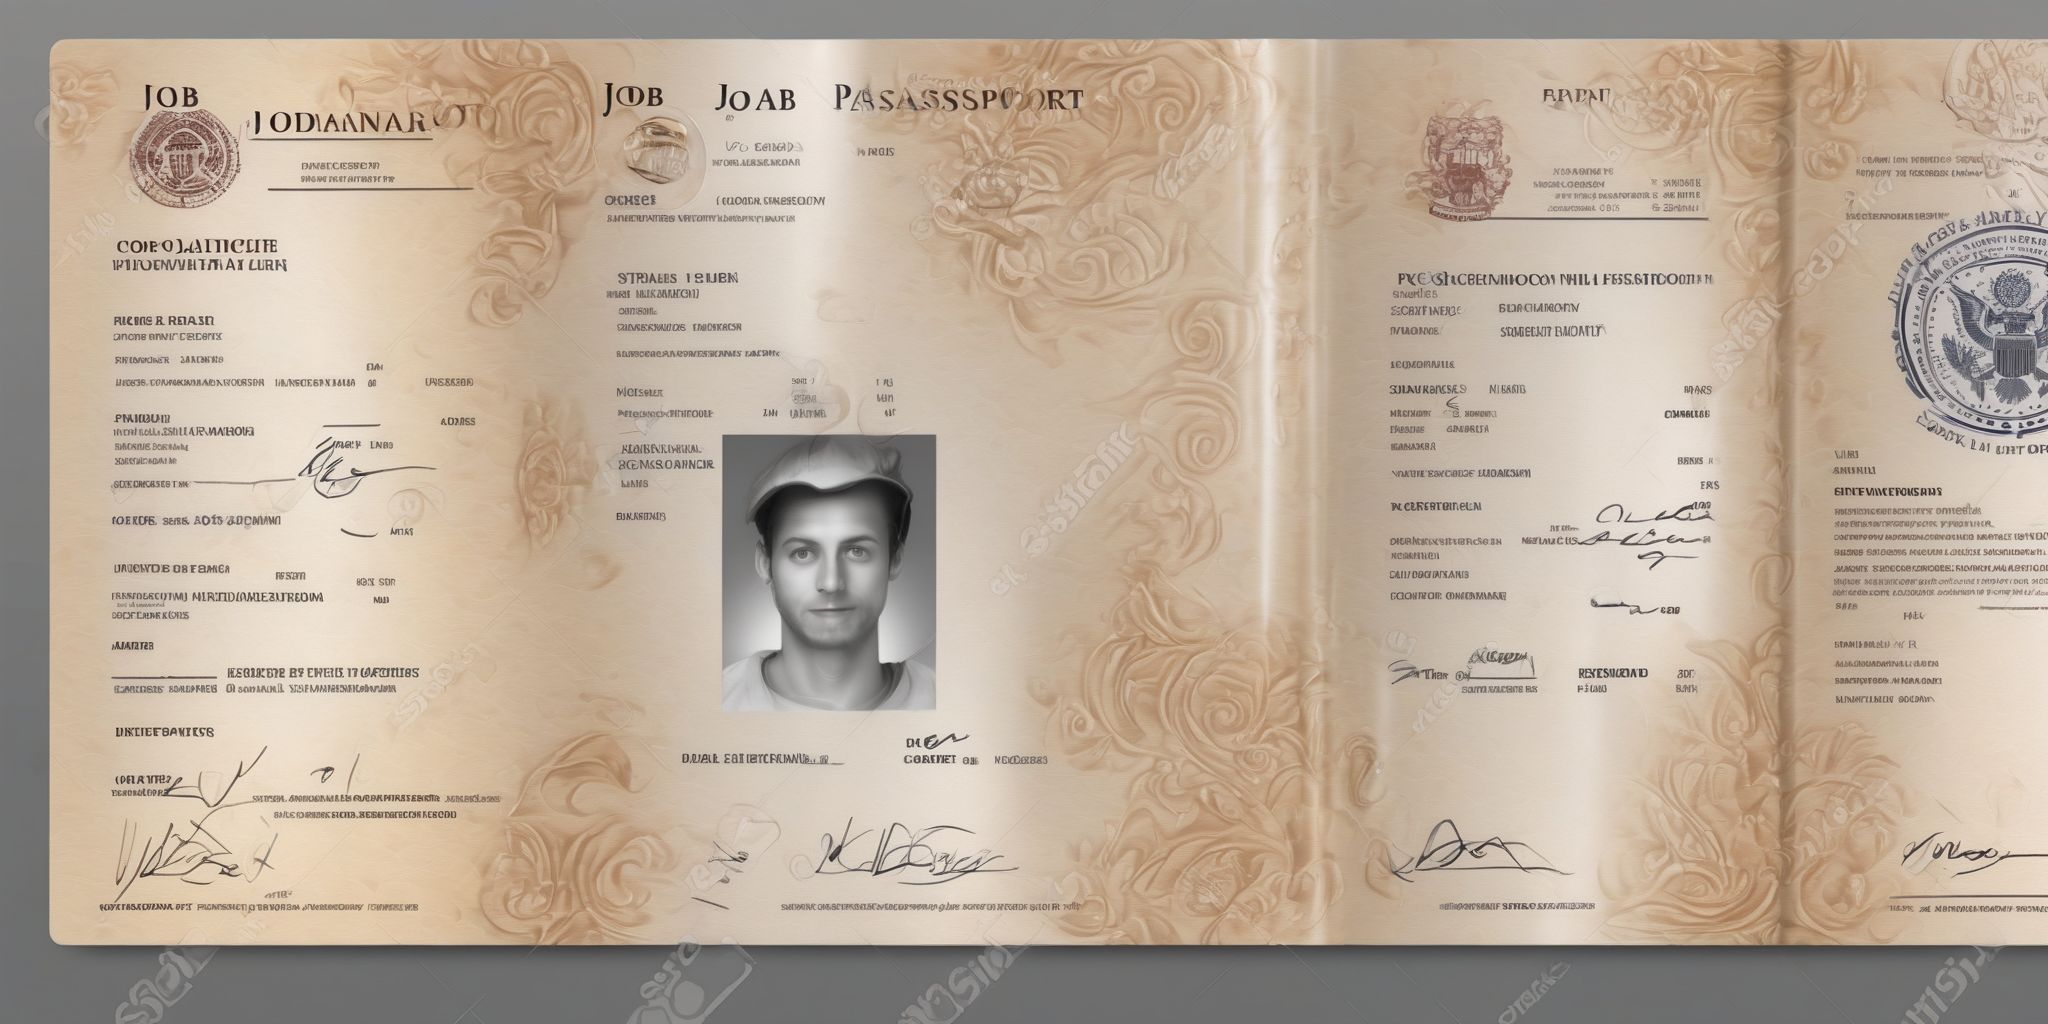 Job passport  in realistic, photographic style